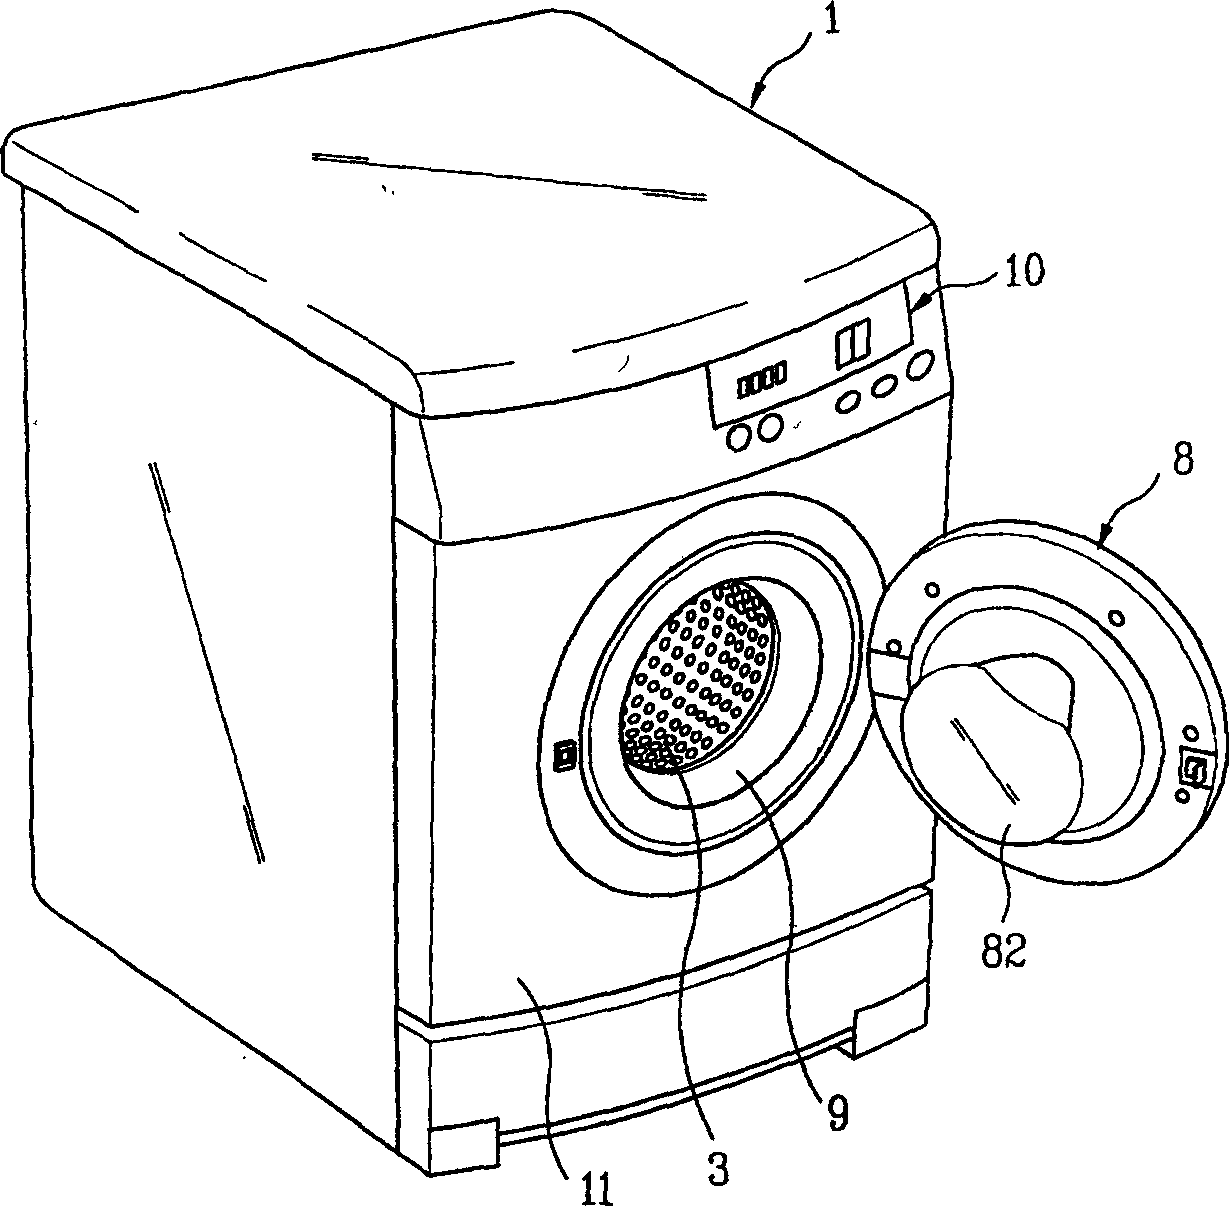 Cabinet door device for rolling drum washing machine